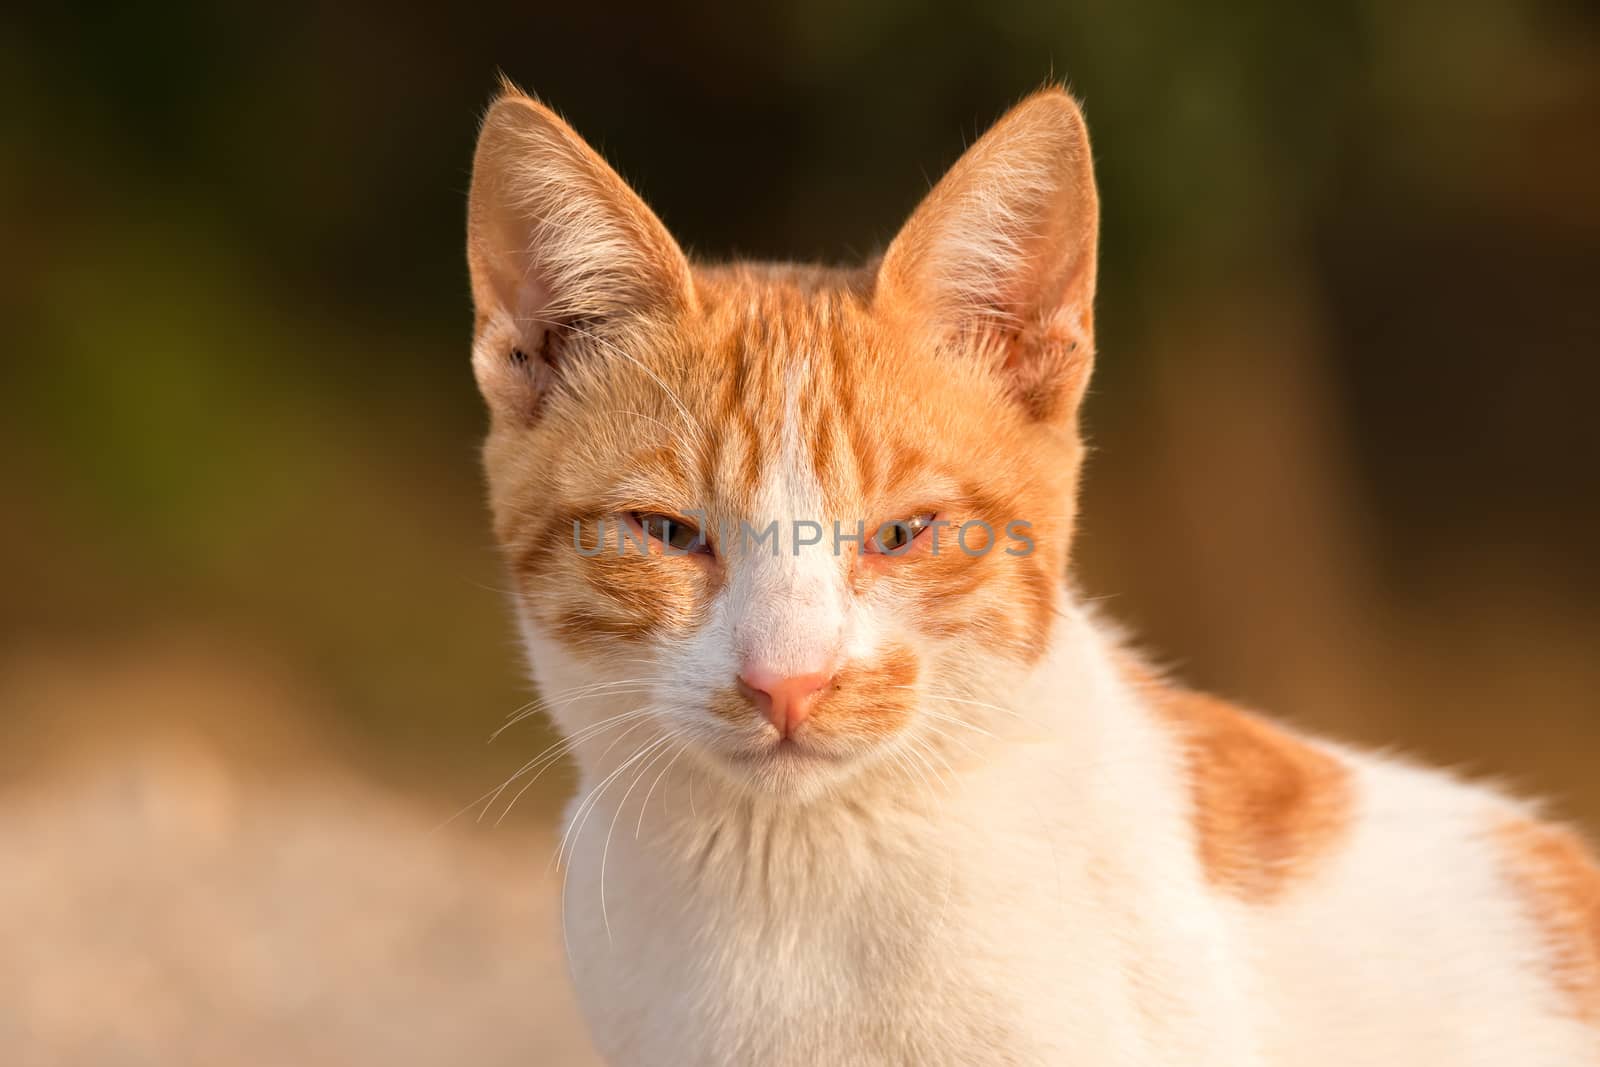 Red cat portrait by Digoarpi